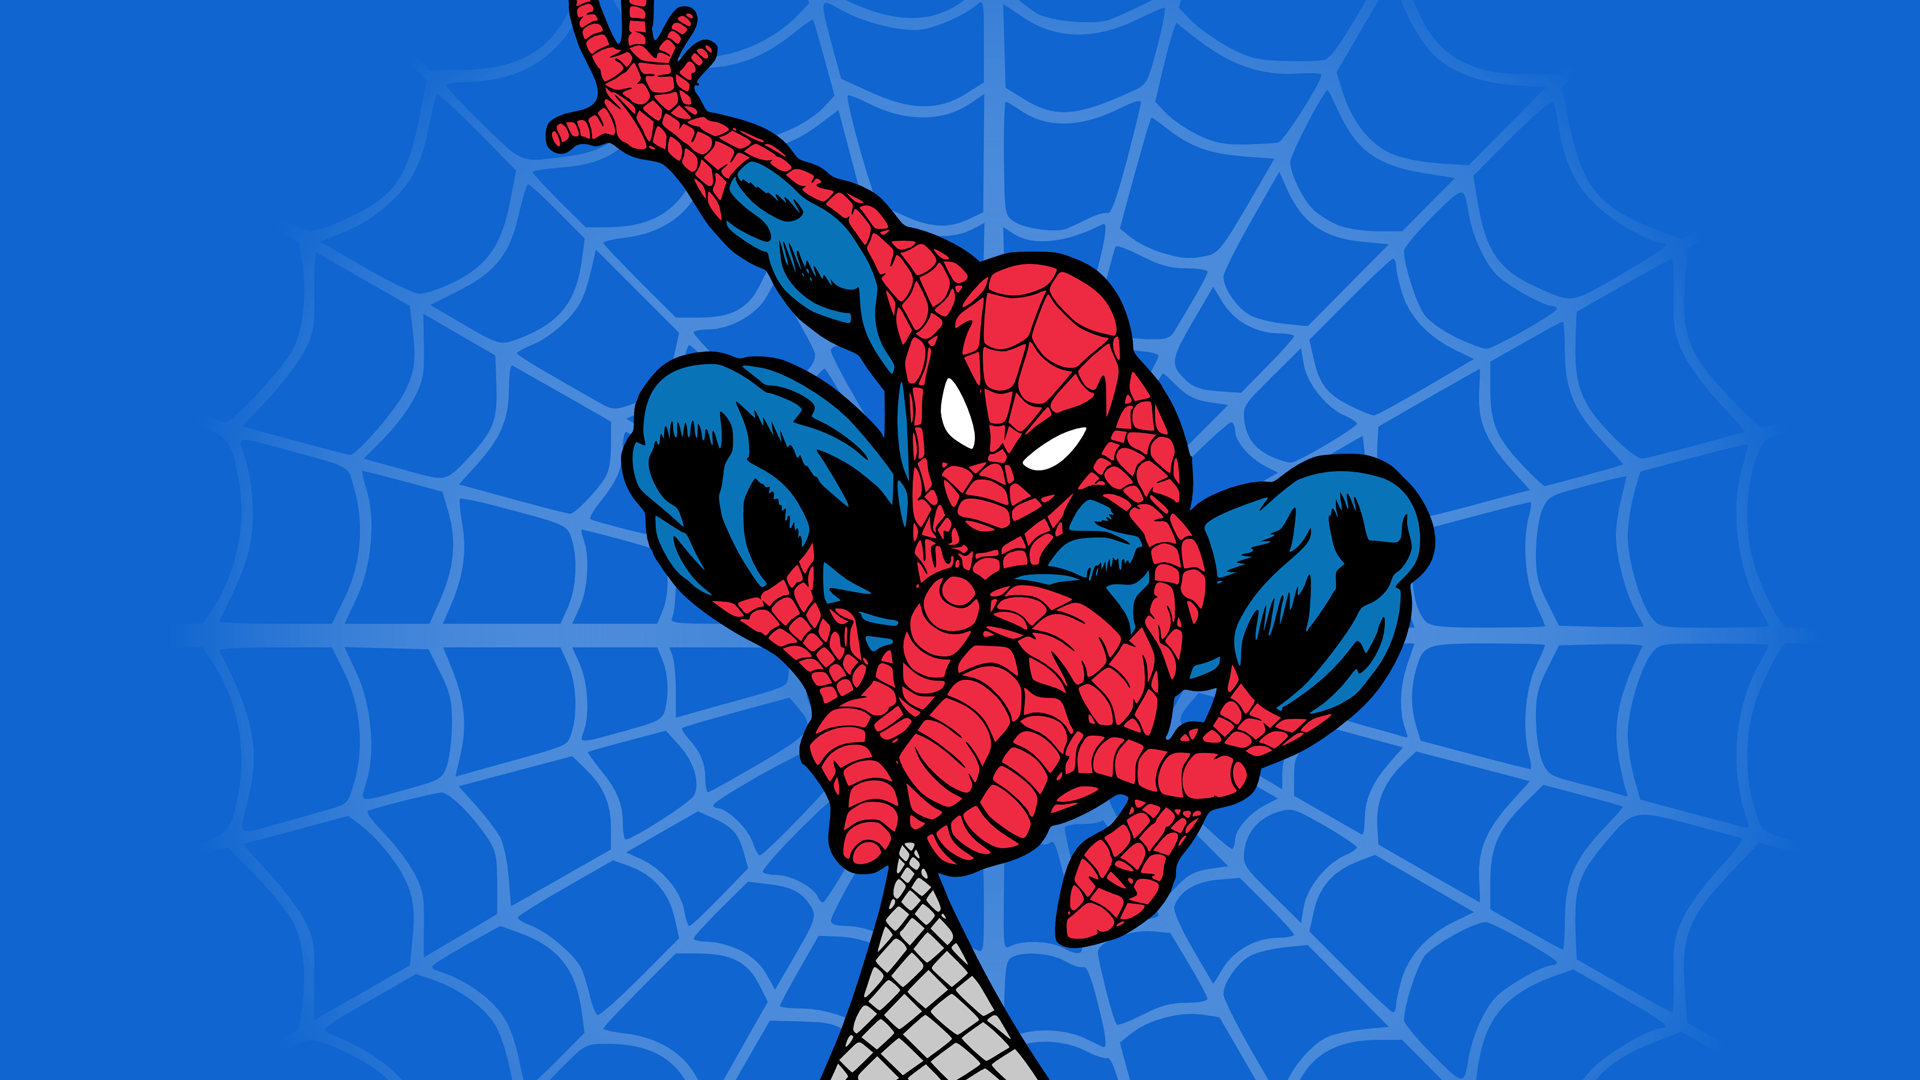 Download Spiderman Wallpaper For iPhone & iPad